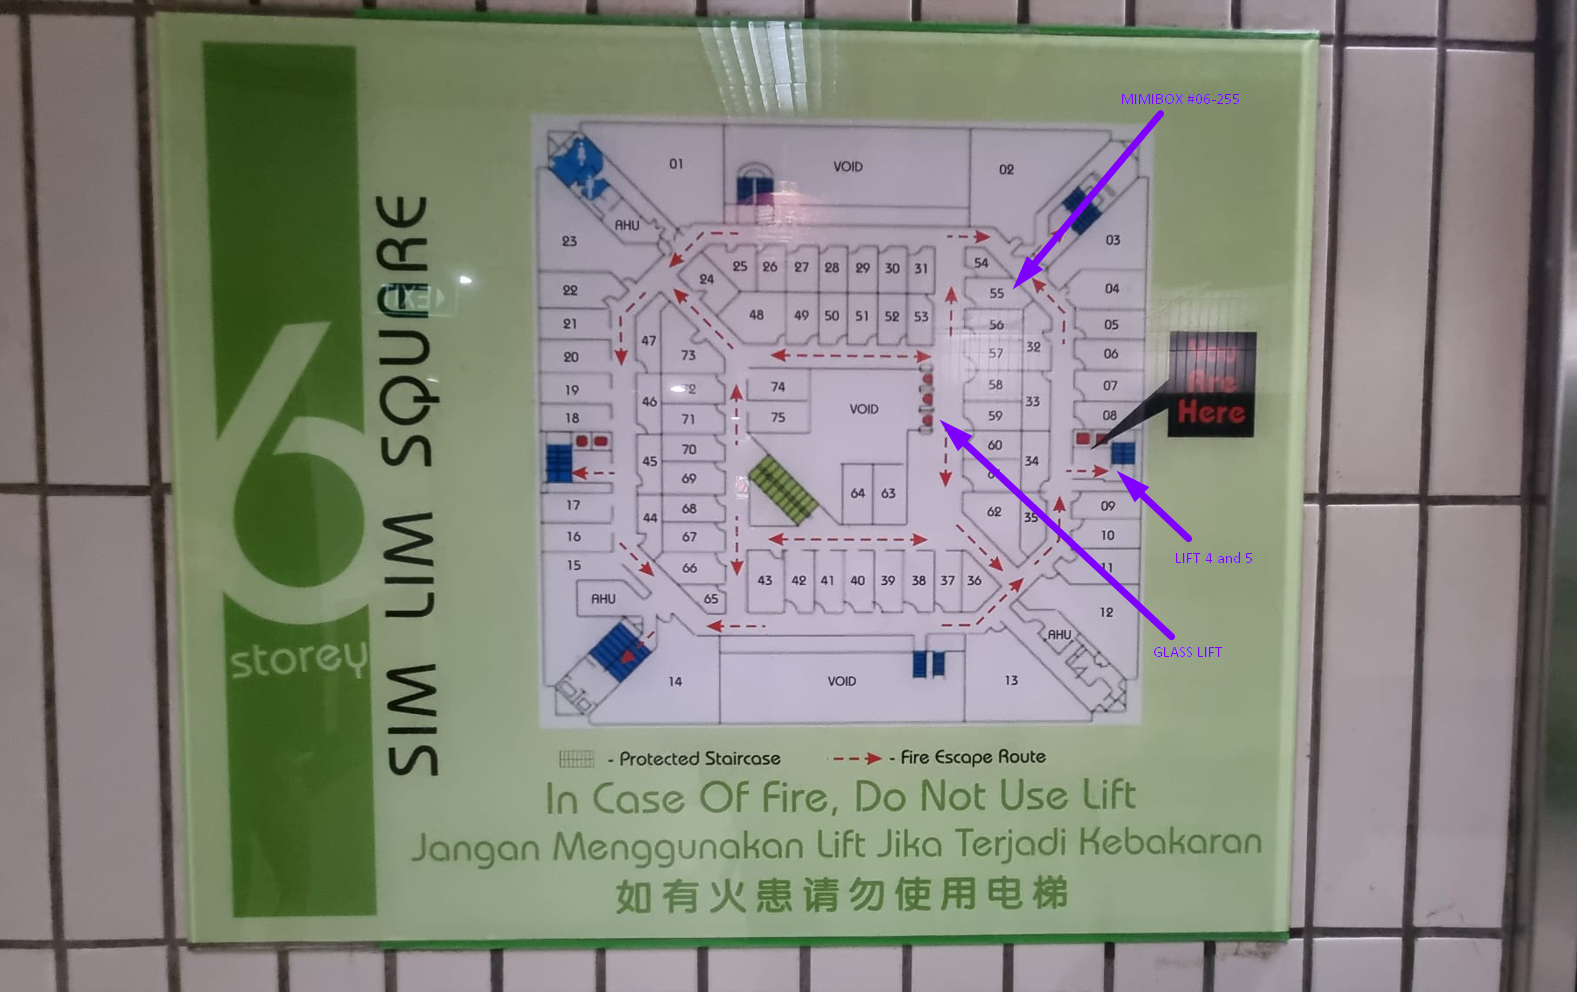 Floorplan map of Sim Lim Square Level 6 Floor 6th Storey Mimibox Adult Toy shop Singapore